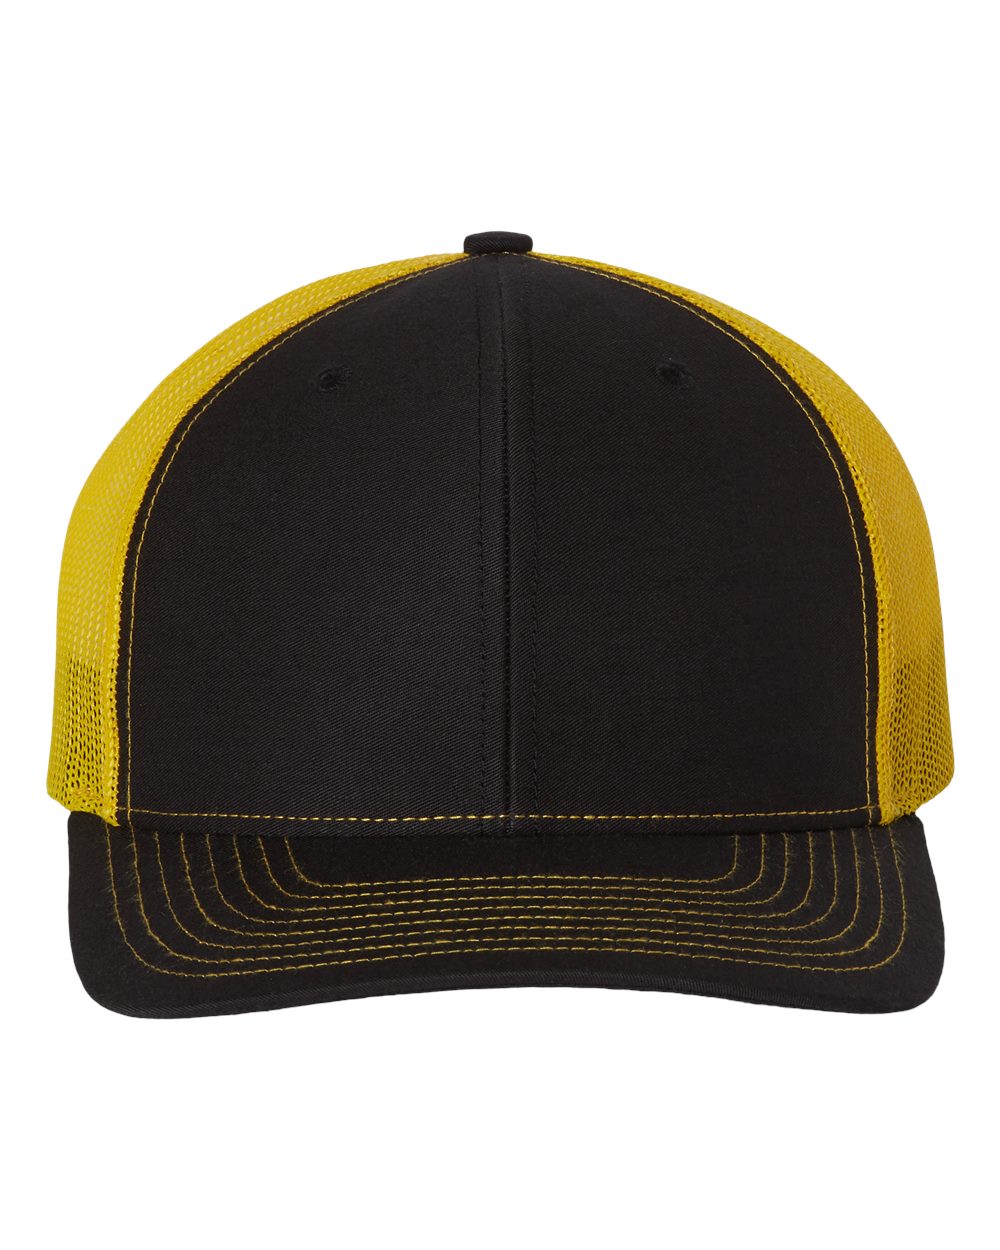 Richardson Snapback Trucker Hat (112) in Black/Yellow